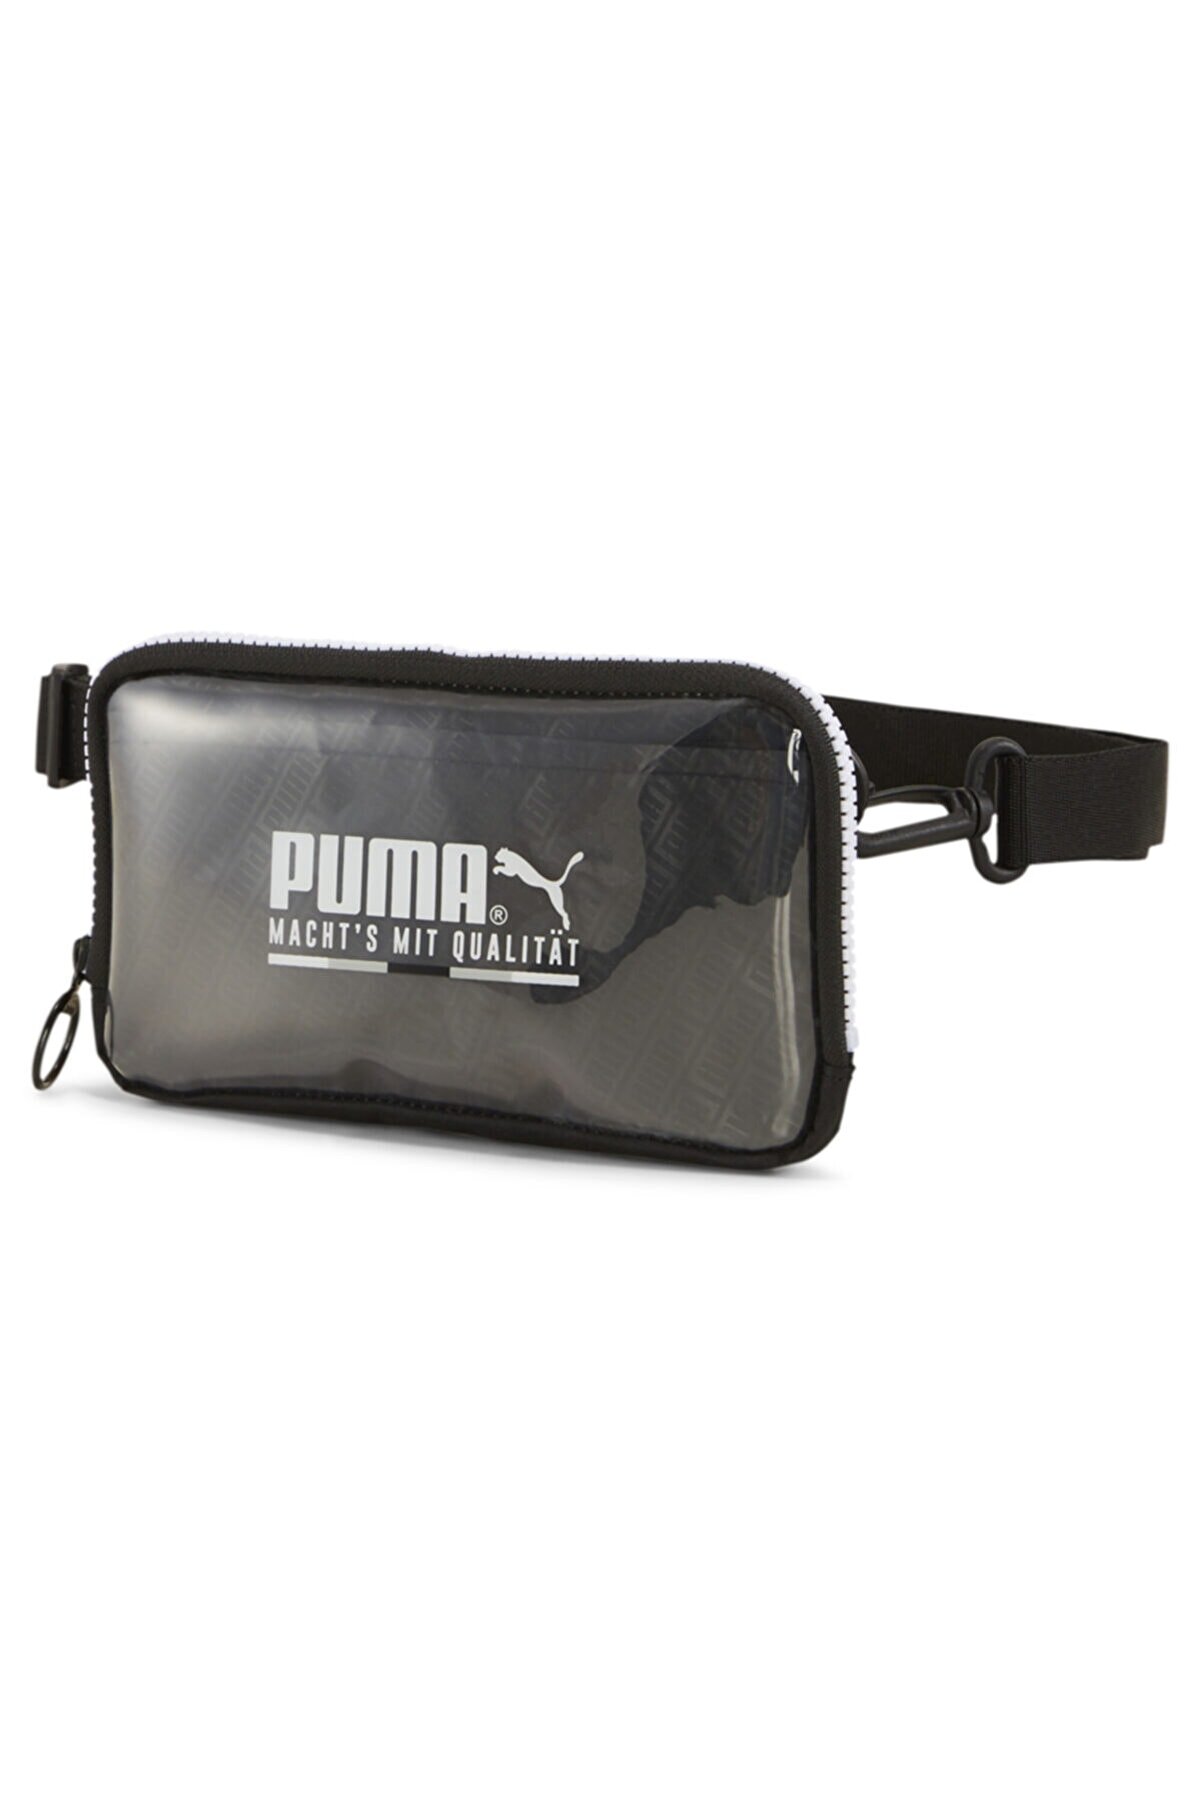 Puma Prime Street Sling Pouch Kadın Bel Çantası 07739401